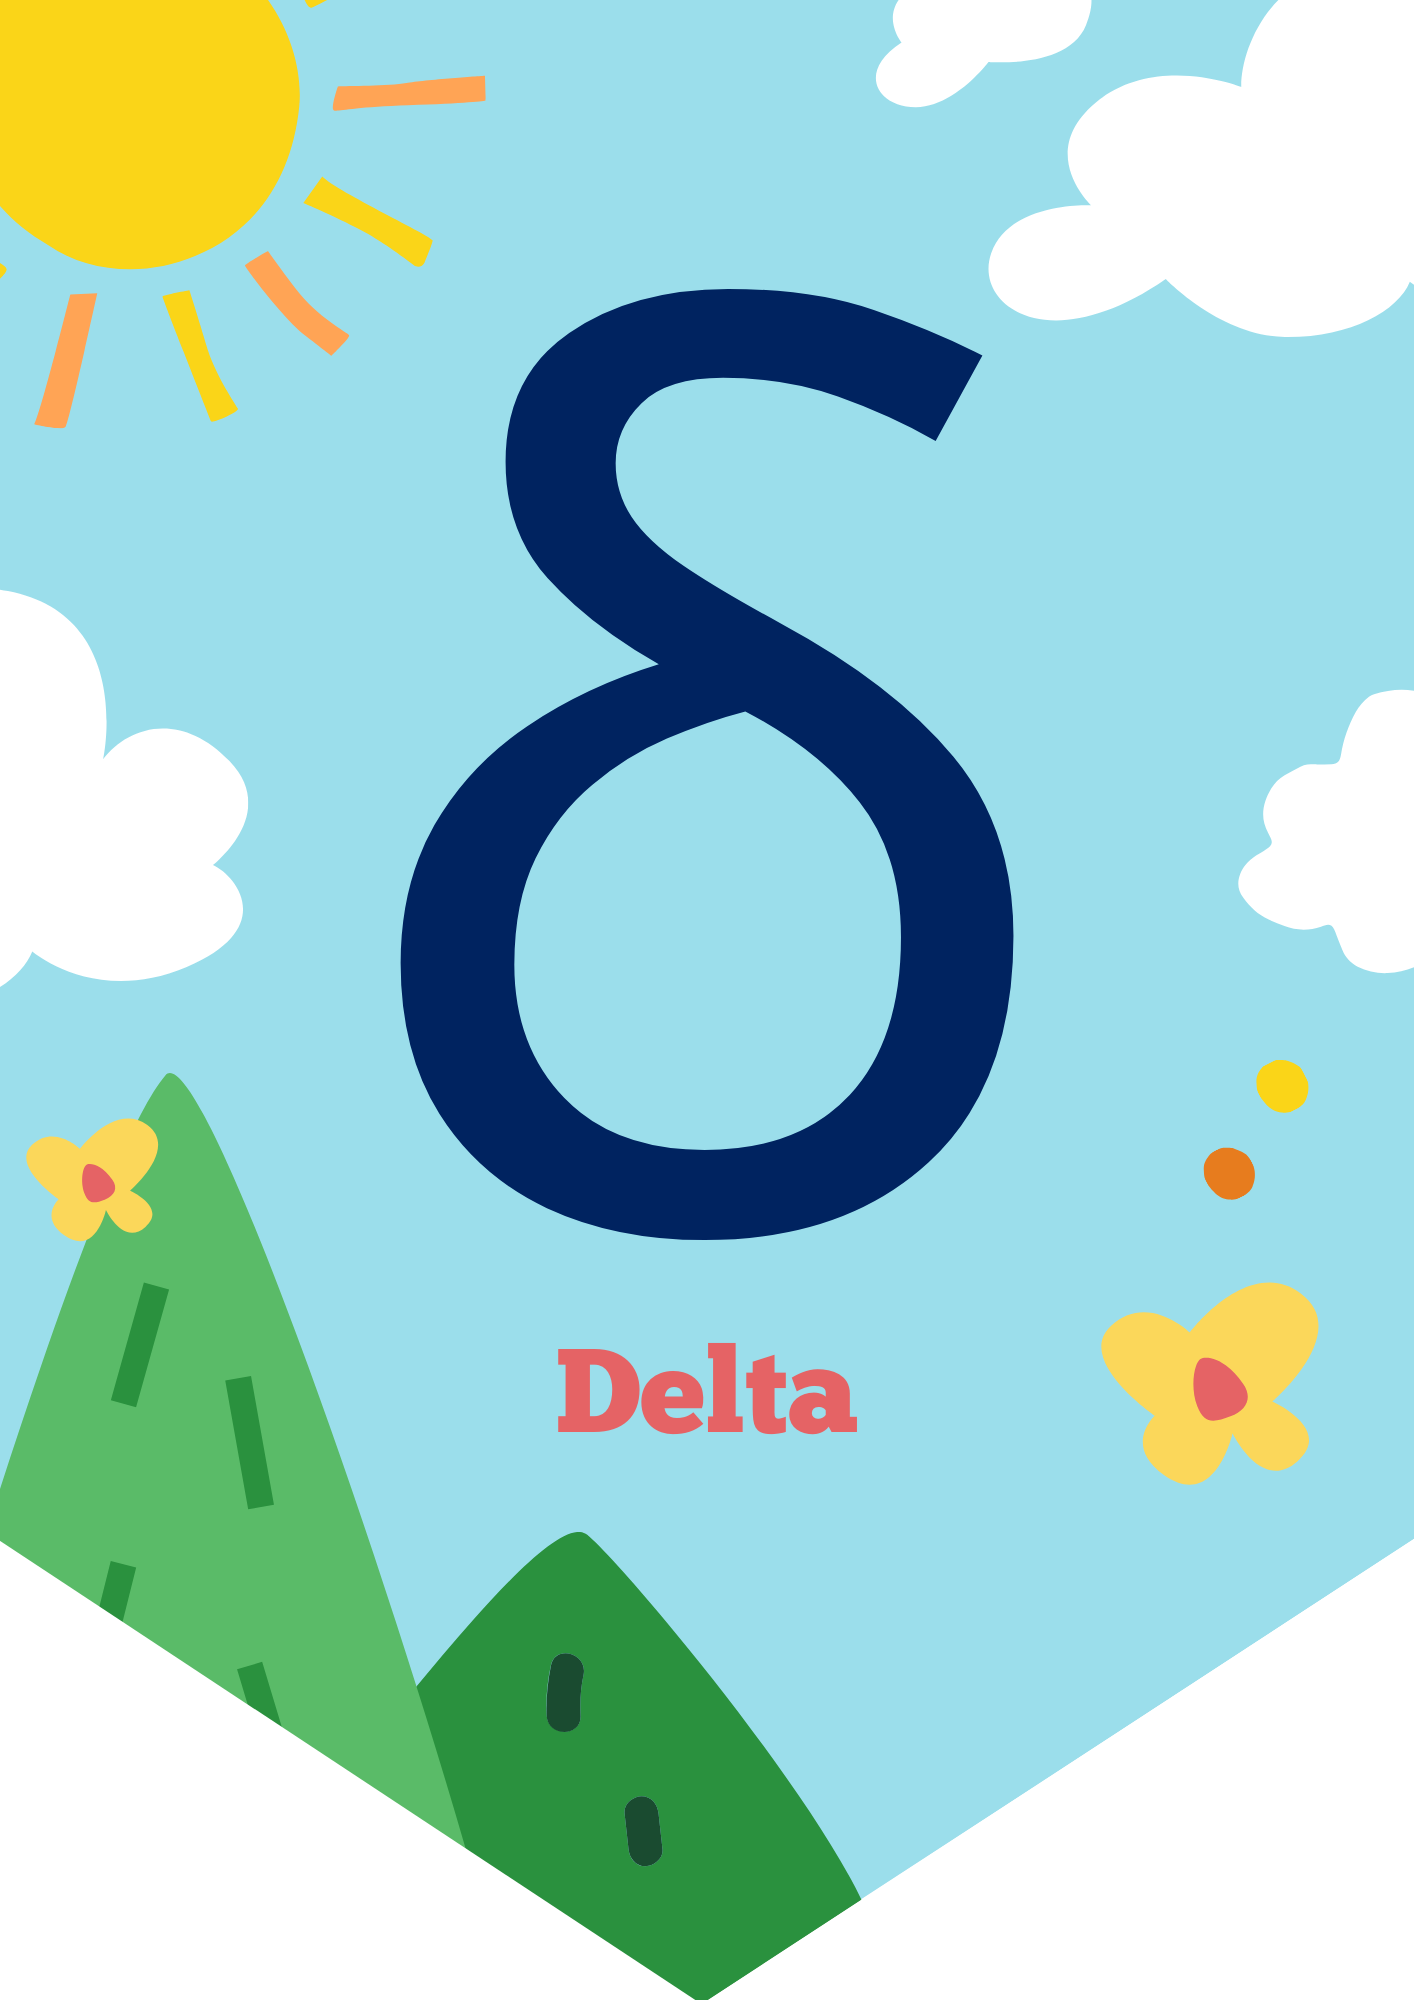 Delta: A River's Shape in Greek Alphabet